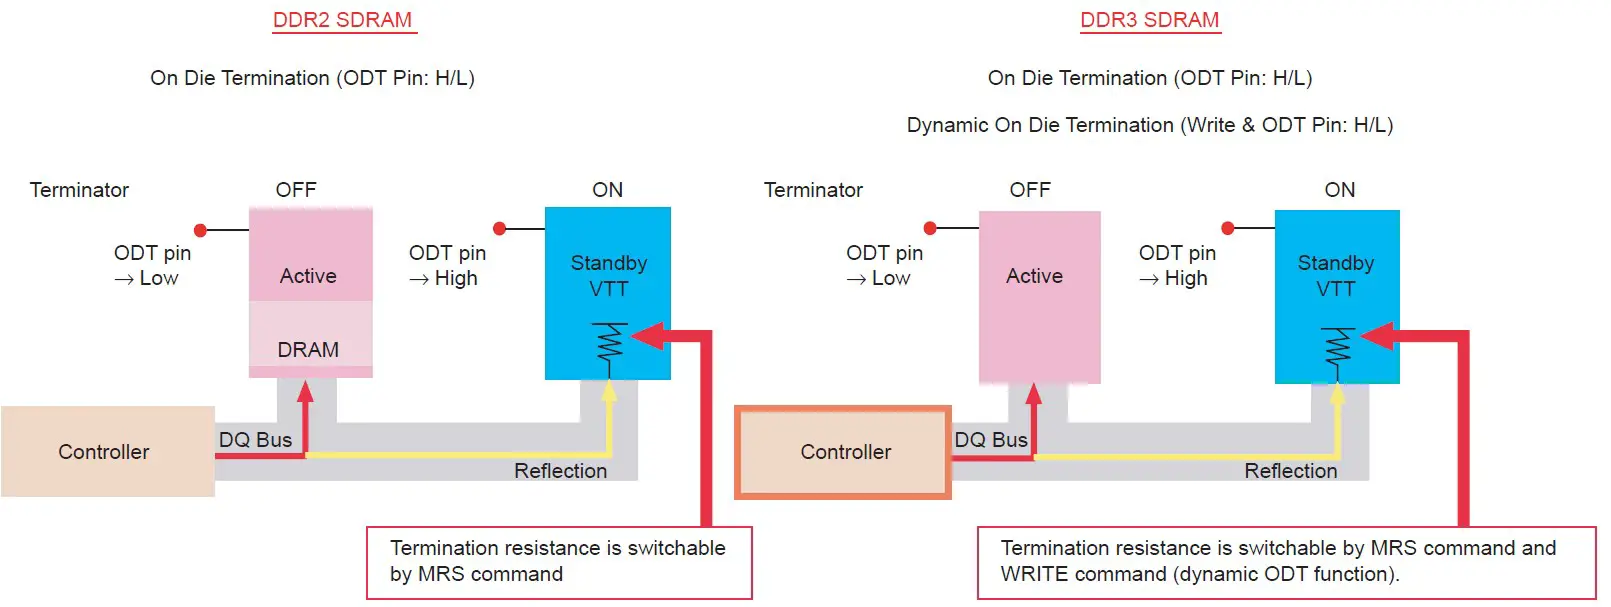 Comparison between ODT of DDR2 SDRAM and Dynamic ODT of DDR3 SDRAM